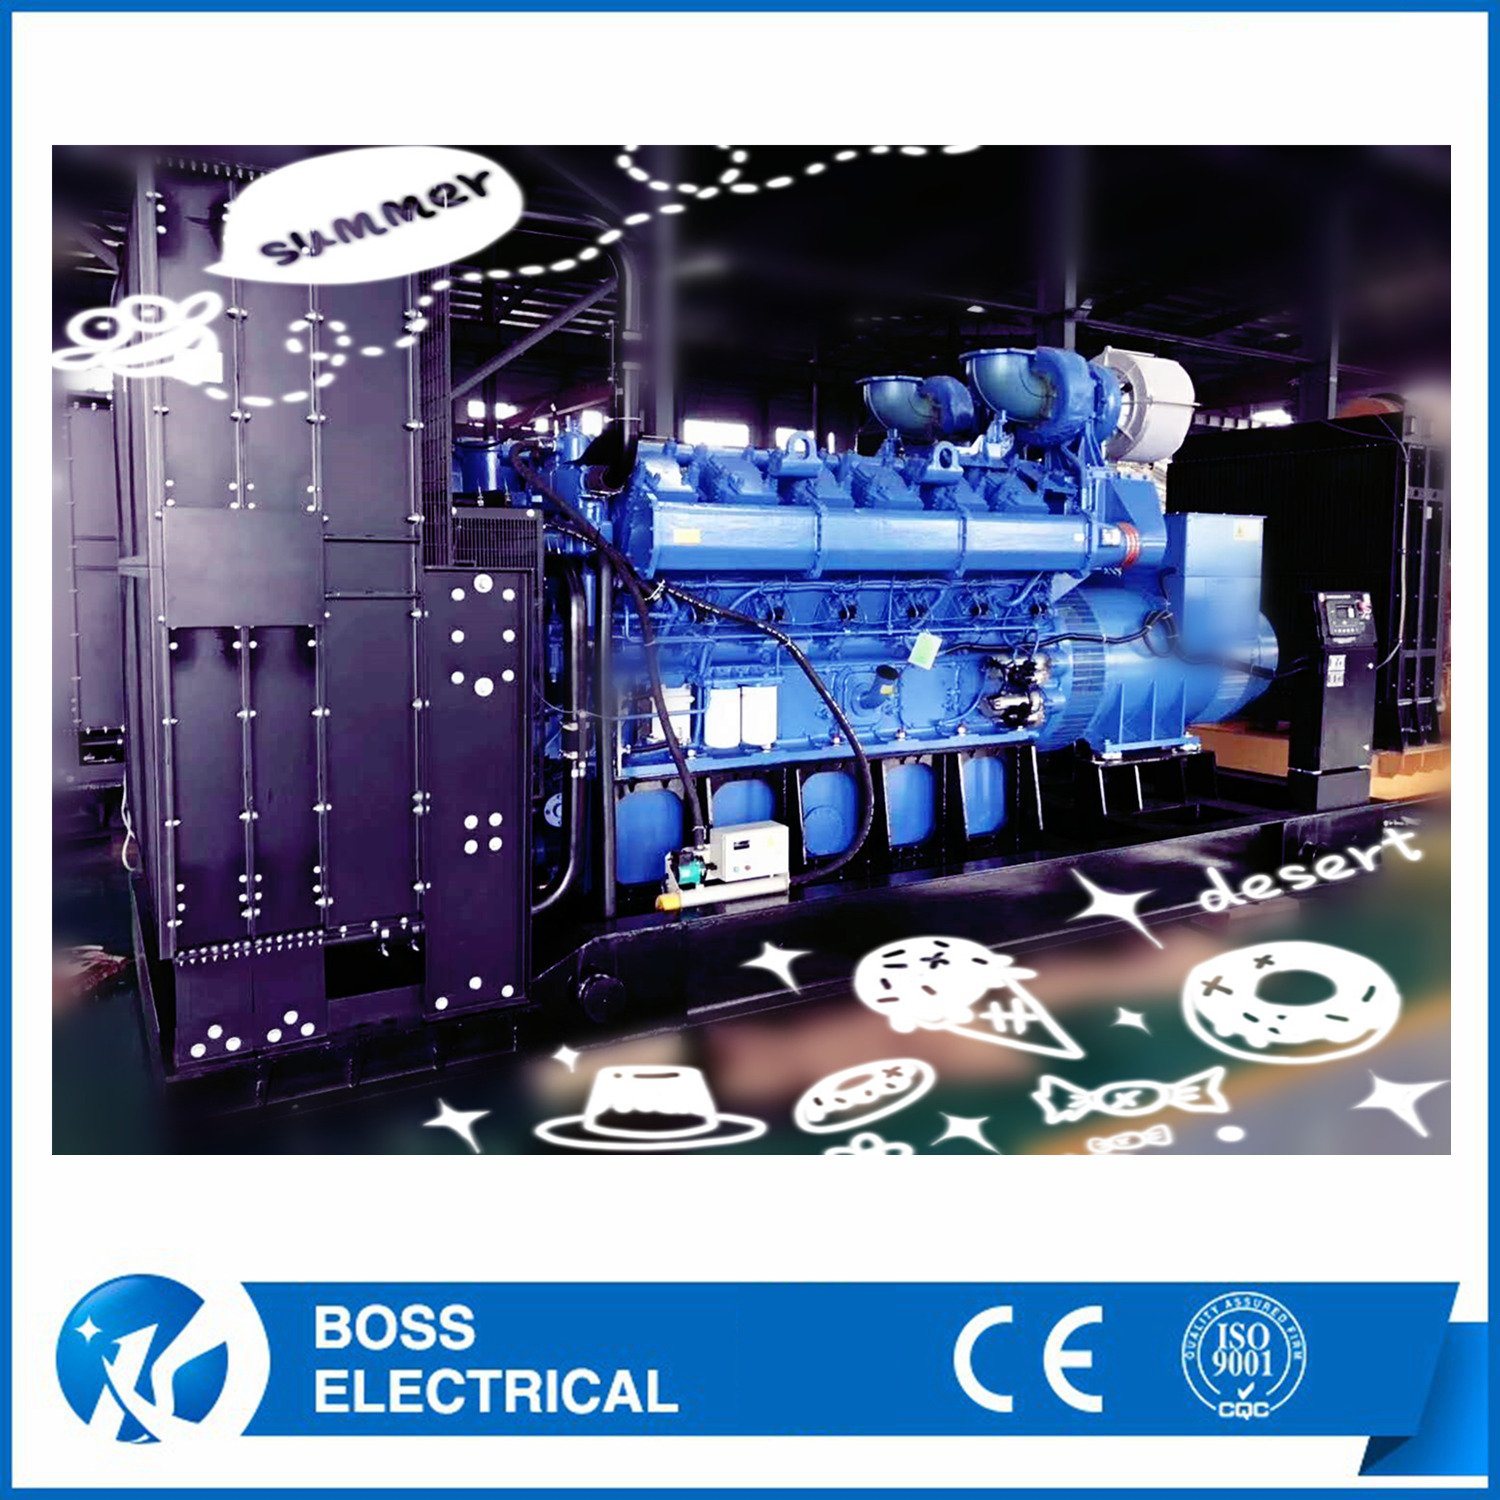 Medium Size Yuchai 100kVA 125kVA 150kVA Power/Electric Diesel Generator